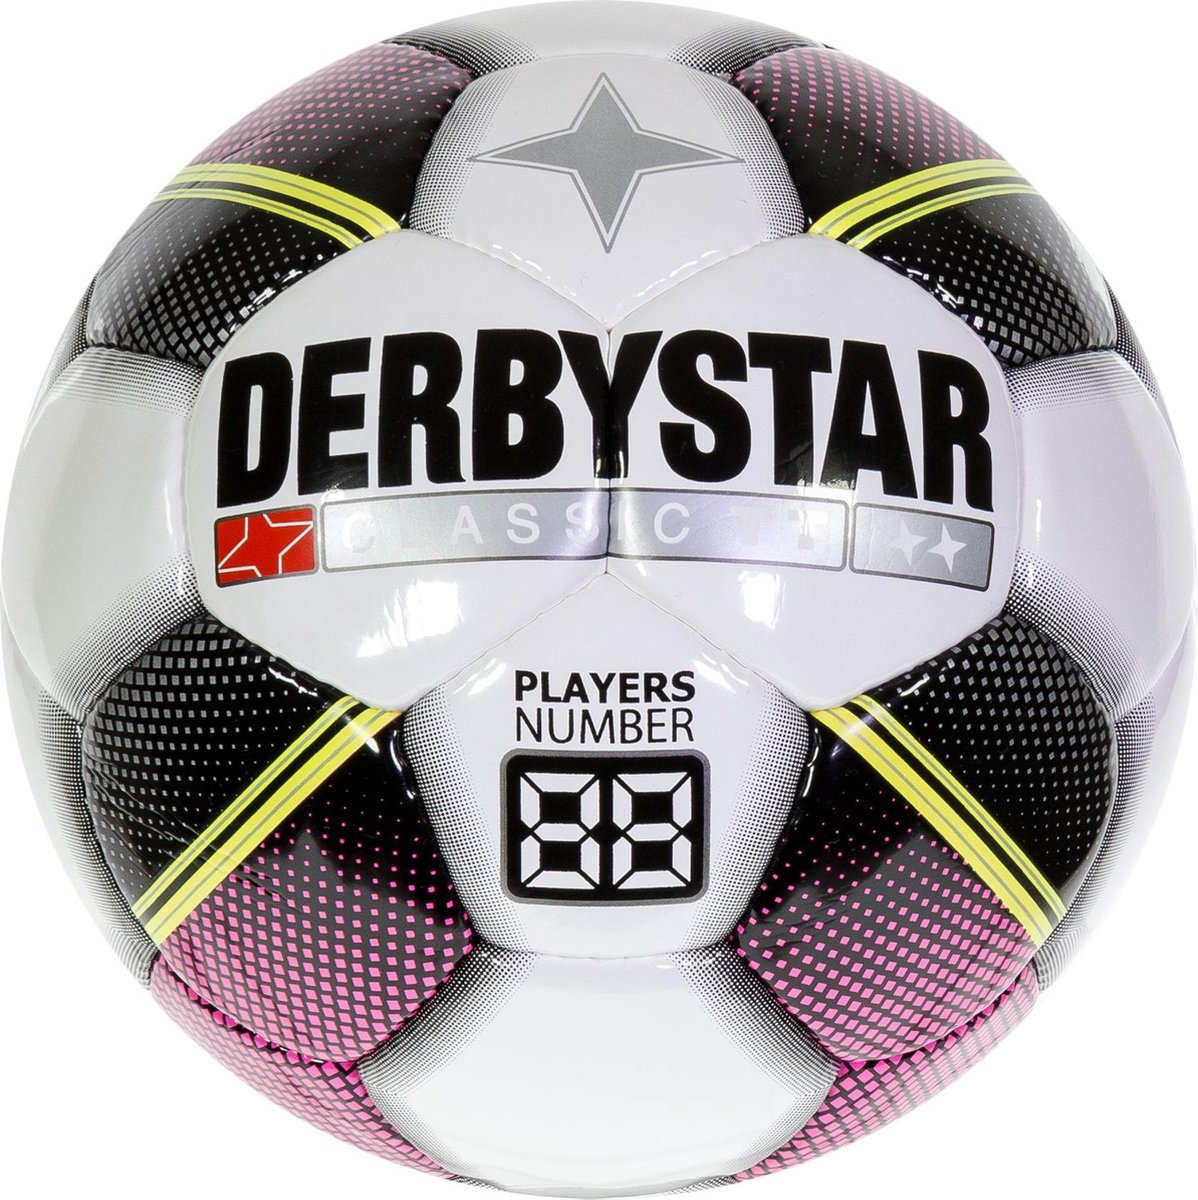 Derbystar Classic TT / Light Voetbal wit/roze - Maat 5